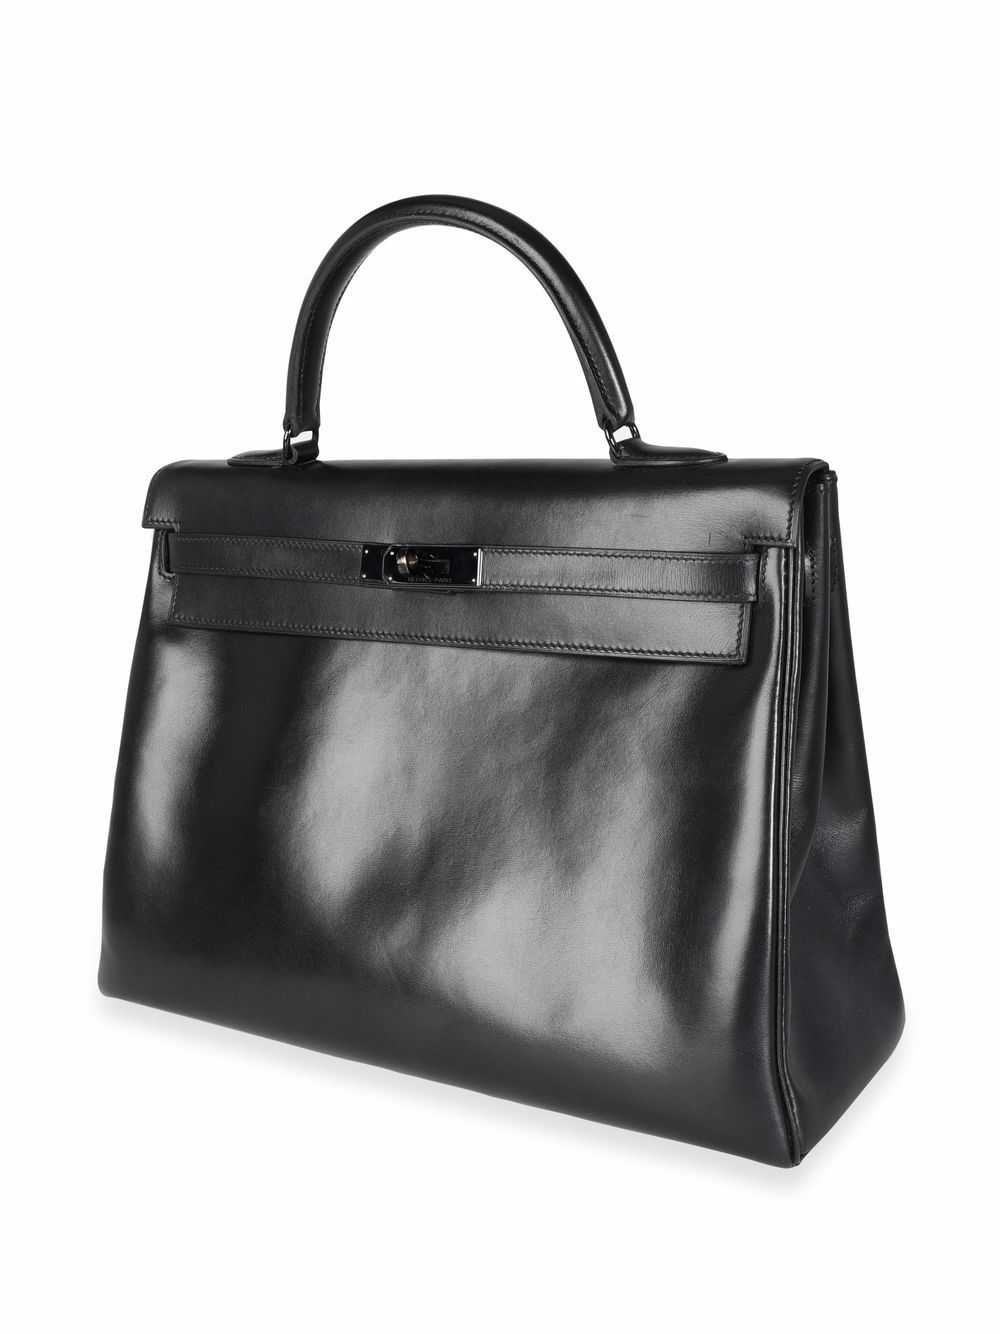 Hermès Pre-Owned Kelly 35 handbag - Black - image 3